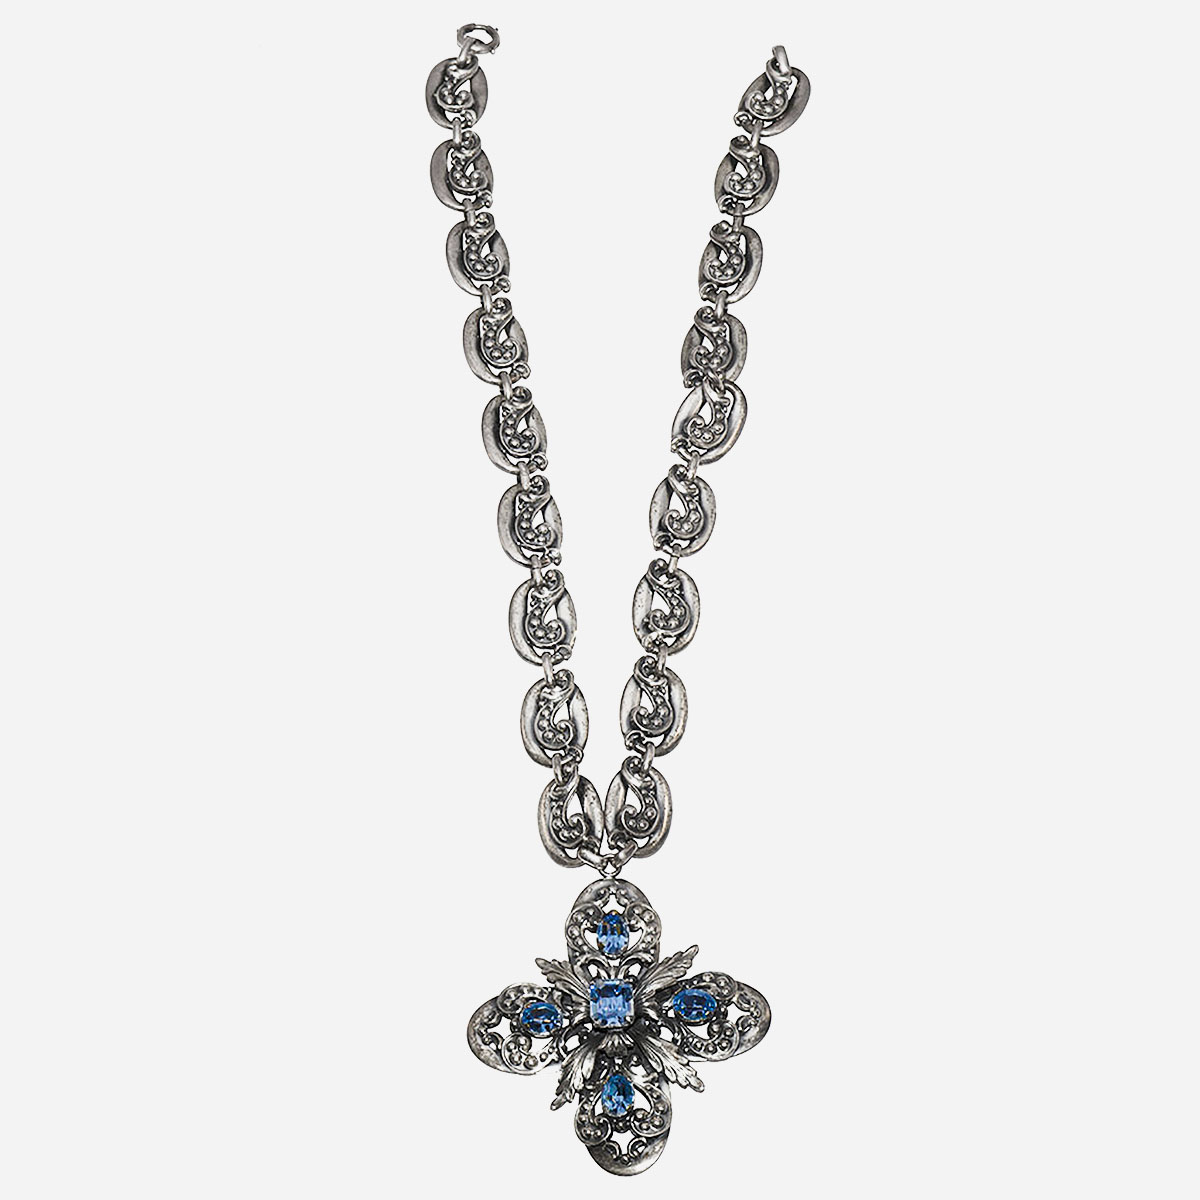 1950s Napier blue topaz necklace